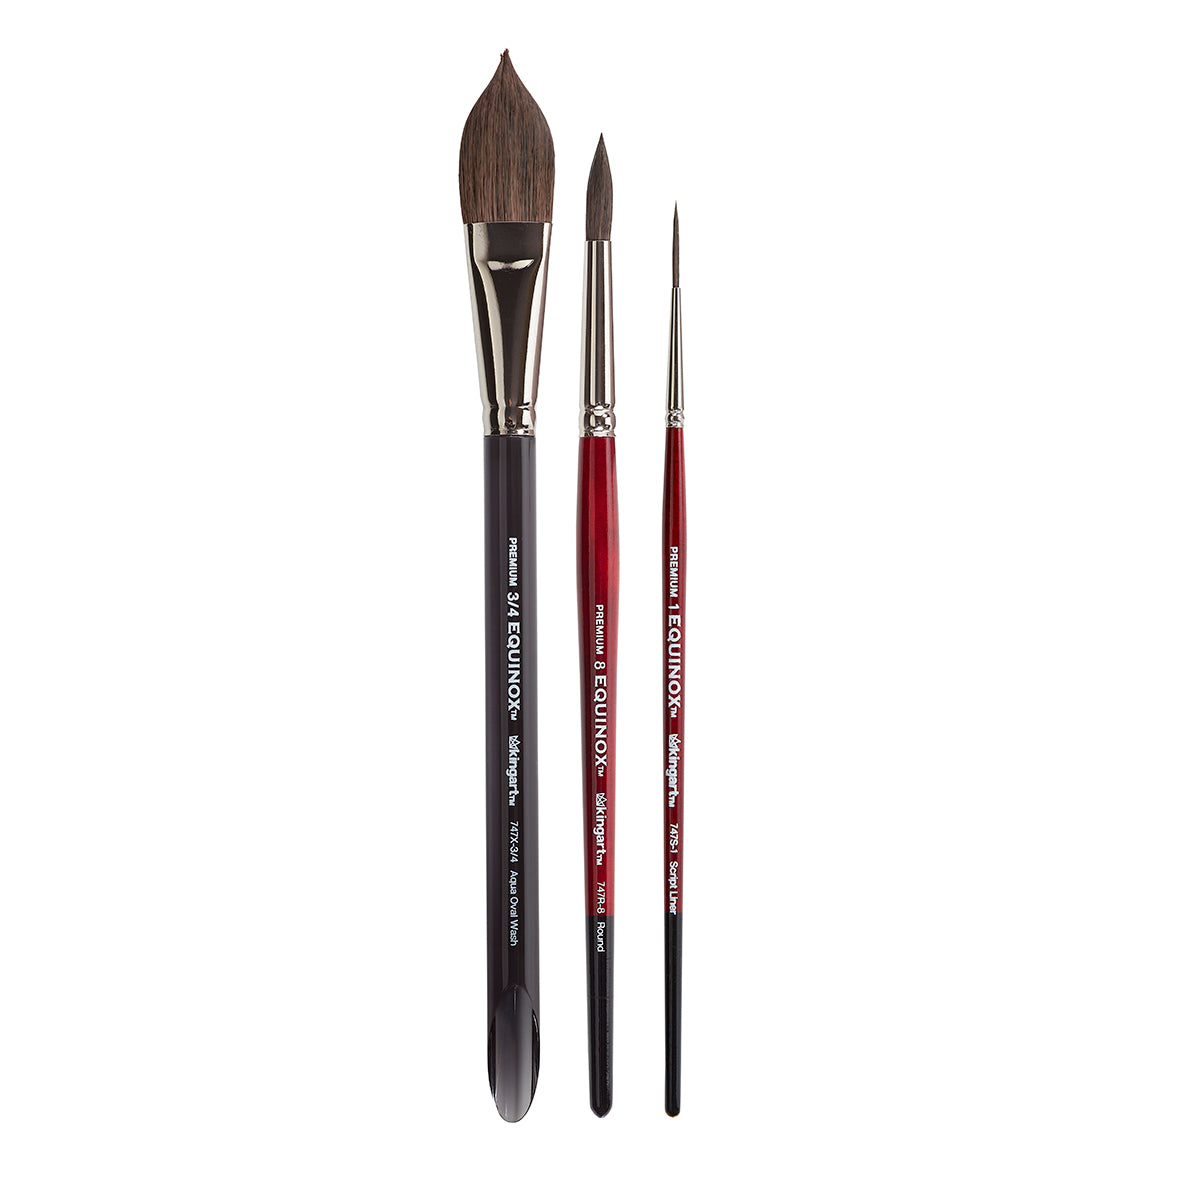 Kingart Finesse 8050 Script Liner Series Kolinsky Sable Synthetic Blend Premium Watercolor Artist Brushes